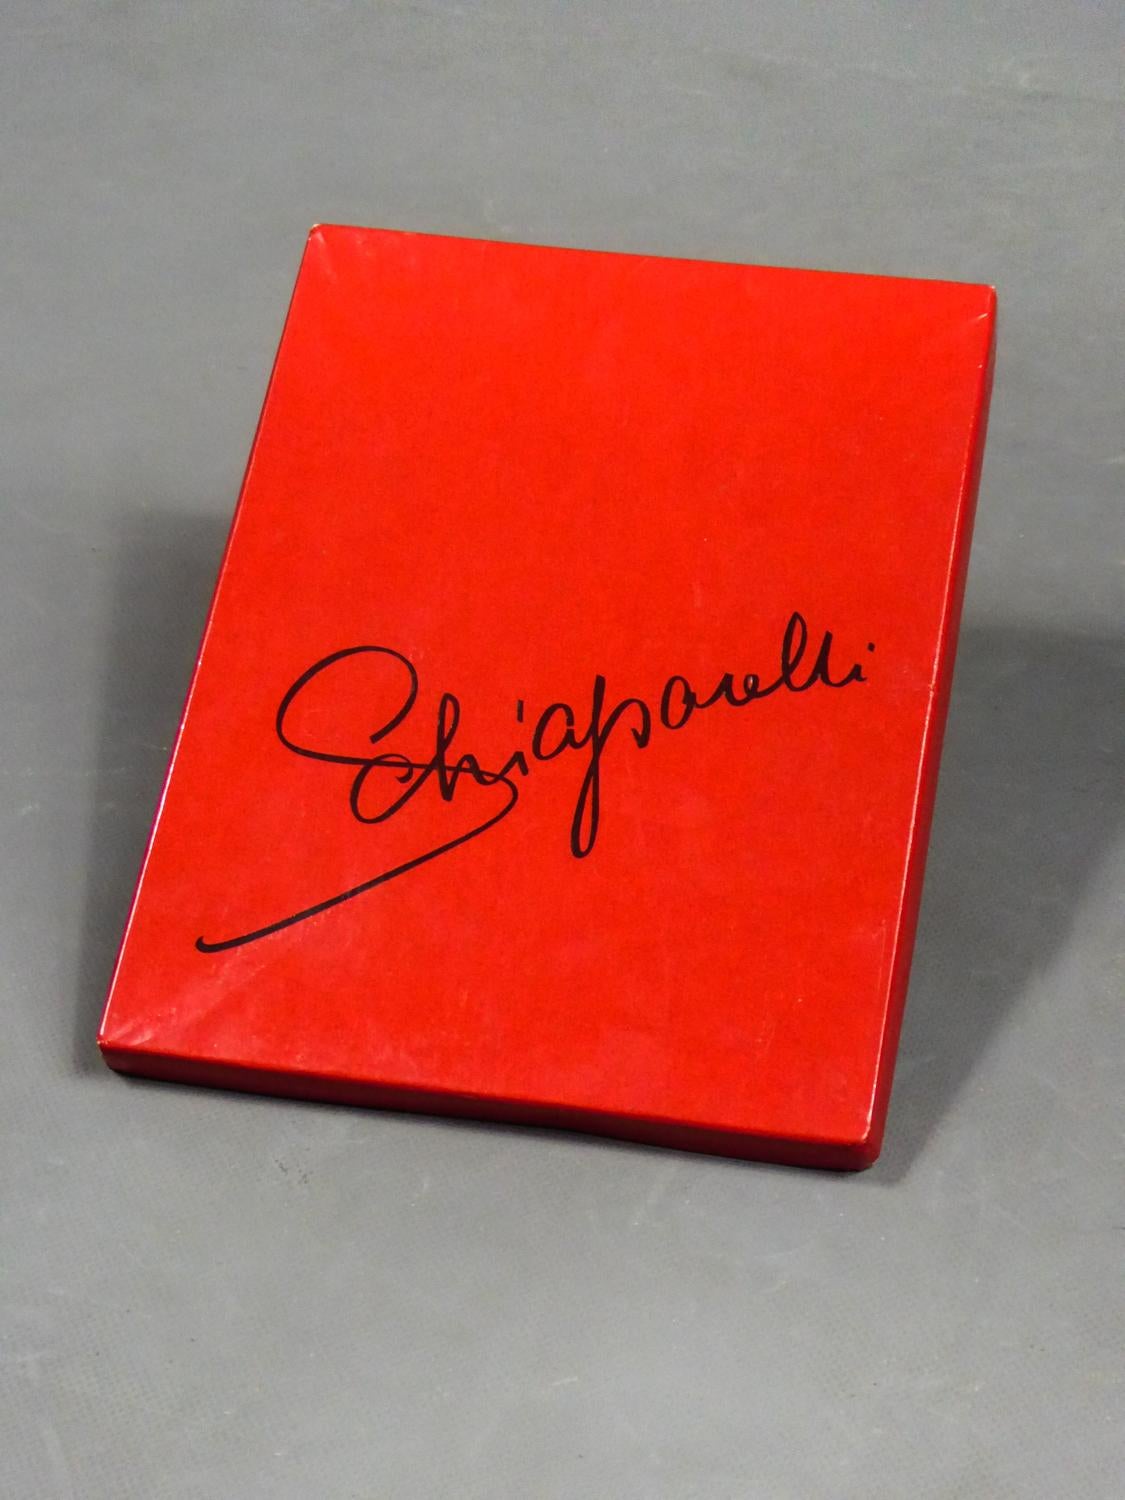 Elsa Schiaparelli Pair of Stockings and Its Original Box Circa 1958  For Sale 4